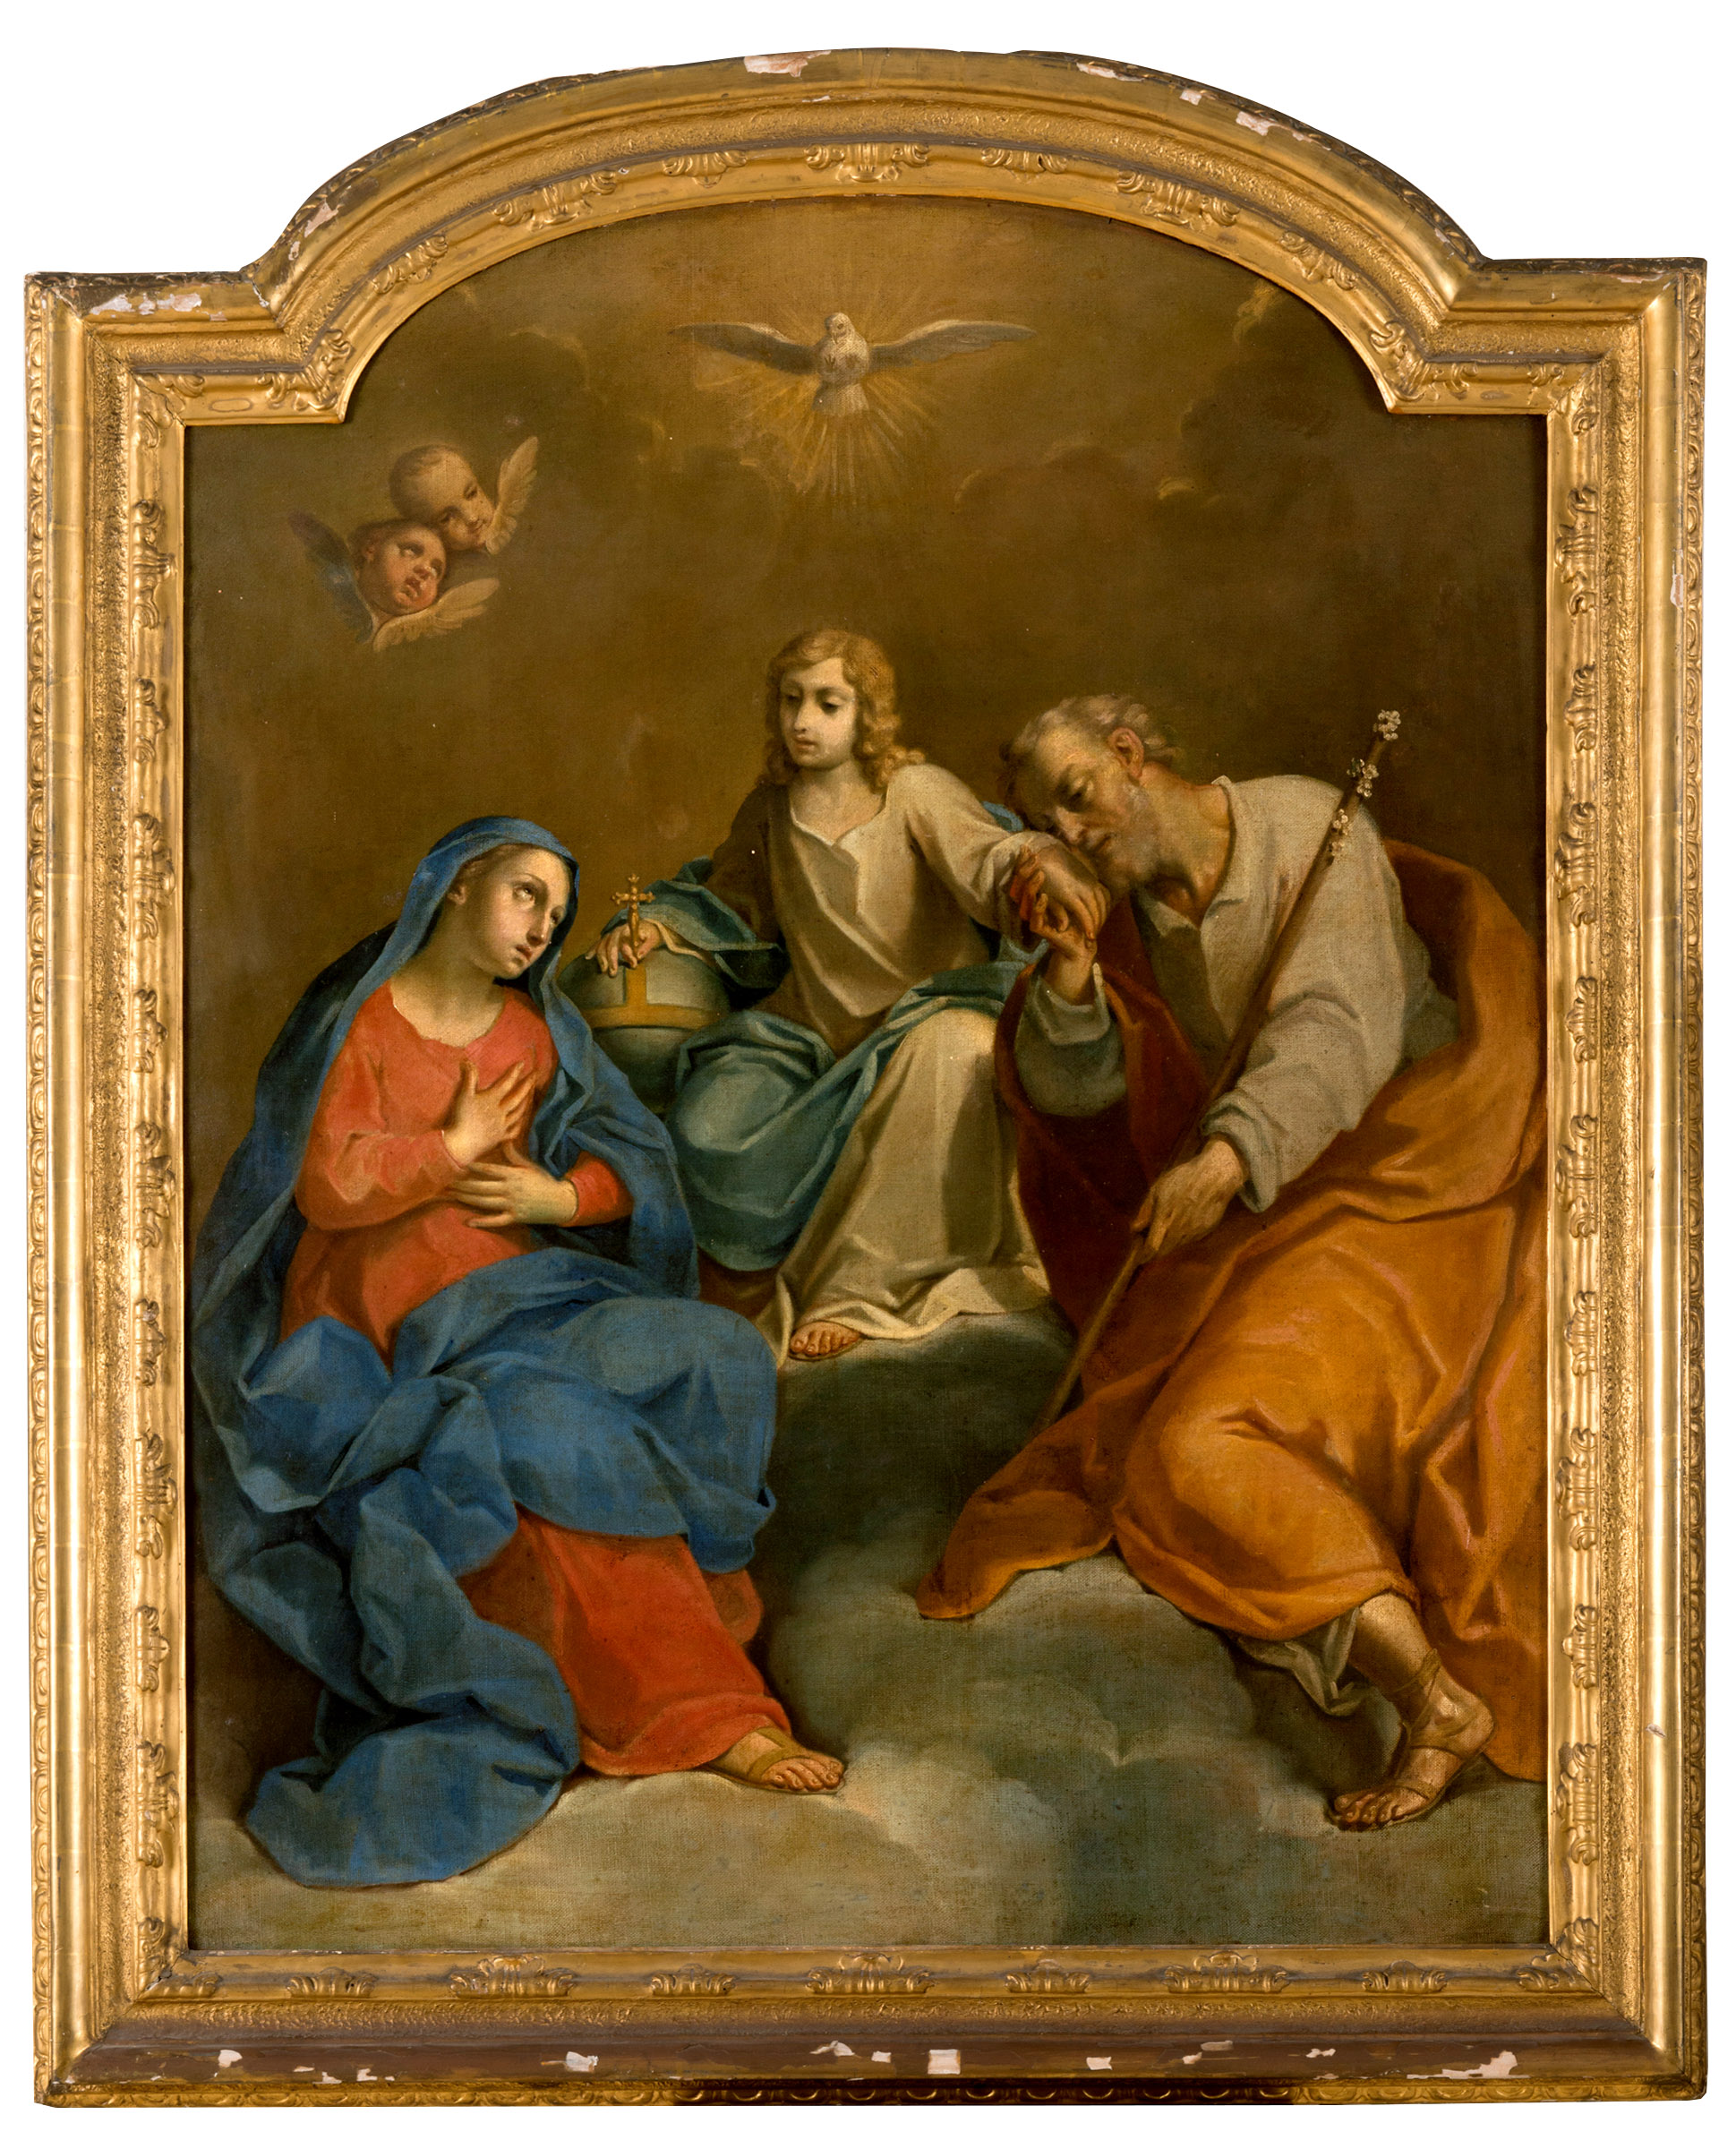 MANNER OF FRANCESCO DE MURA (1696-1782) THE HOLY FAMILY: MARY AND JOSEPH WITH CHRIST AS SALVATOR